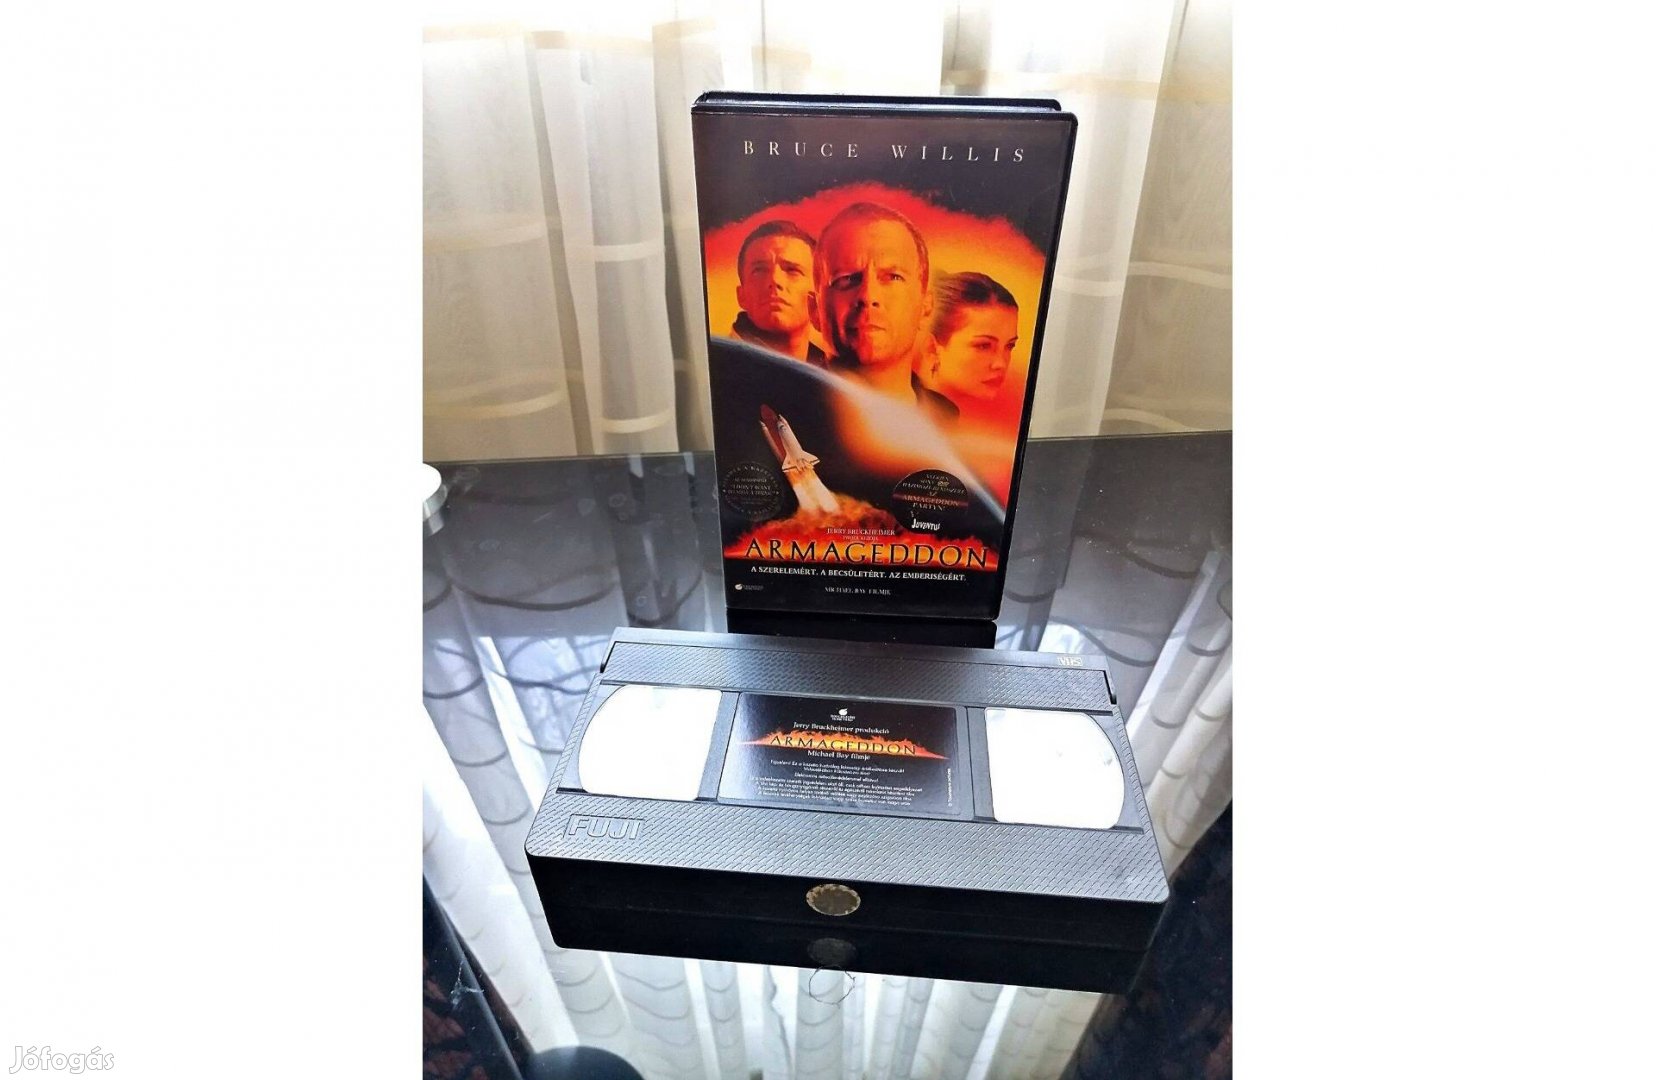 Ritkaság! Bruce Willis : Armageddon VHS kazetta EMV-mmel ellátva